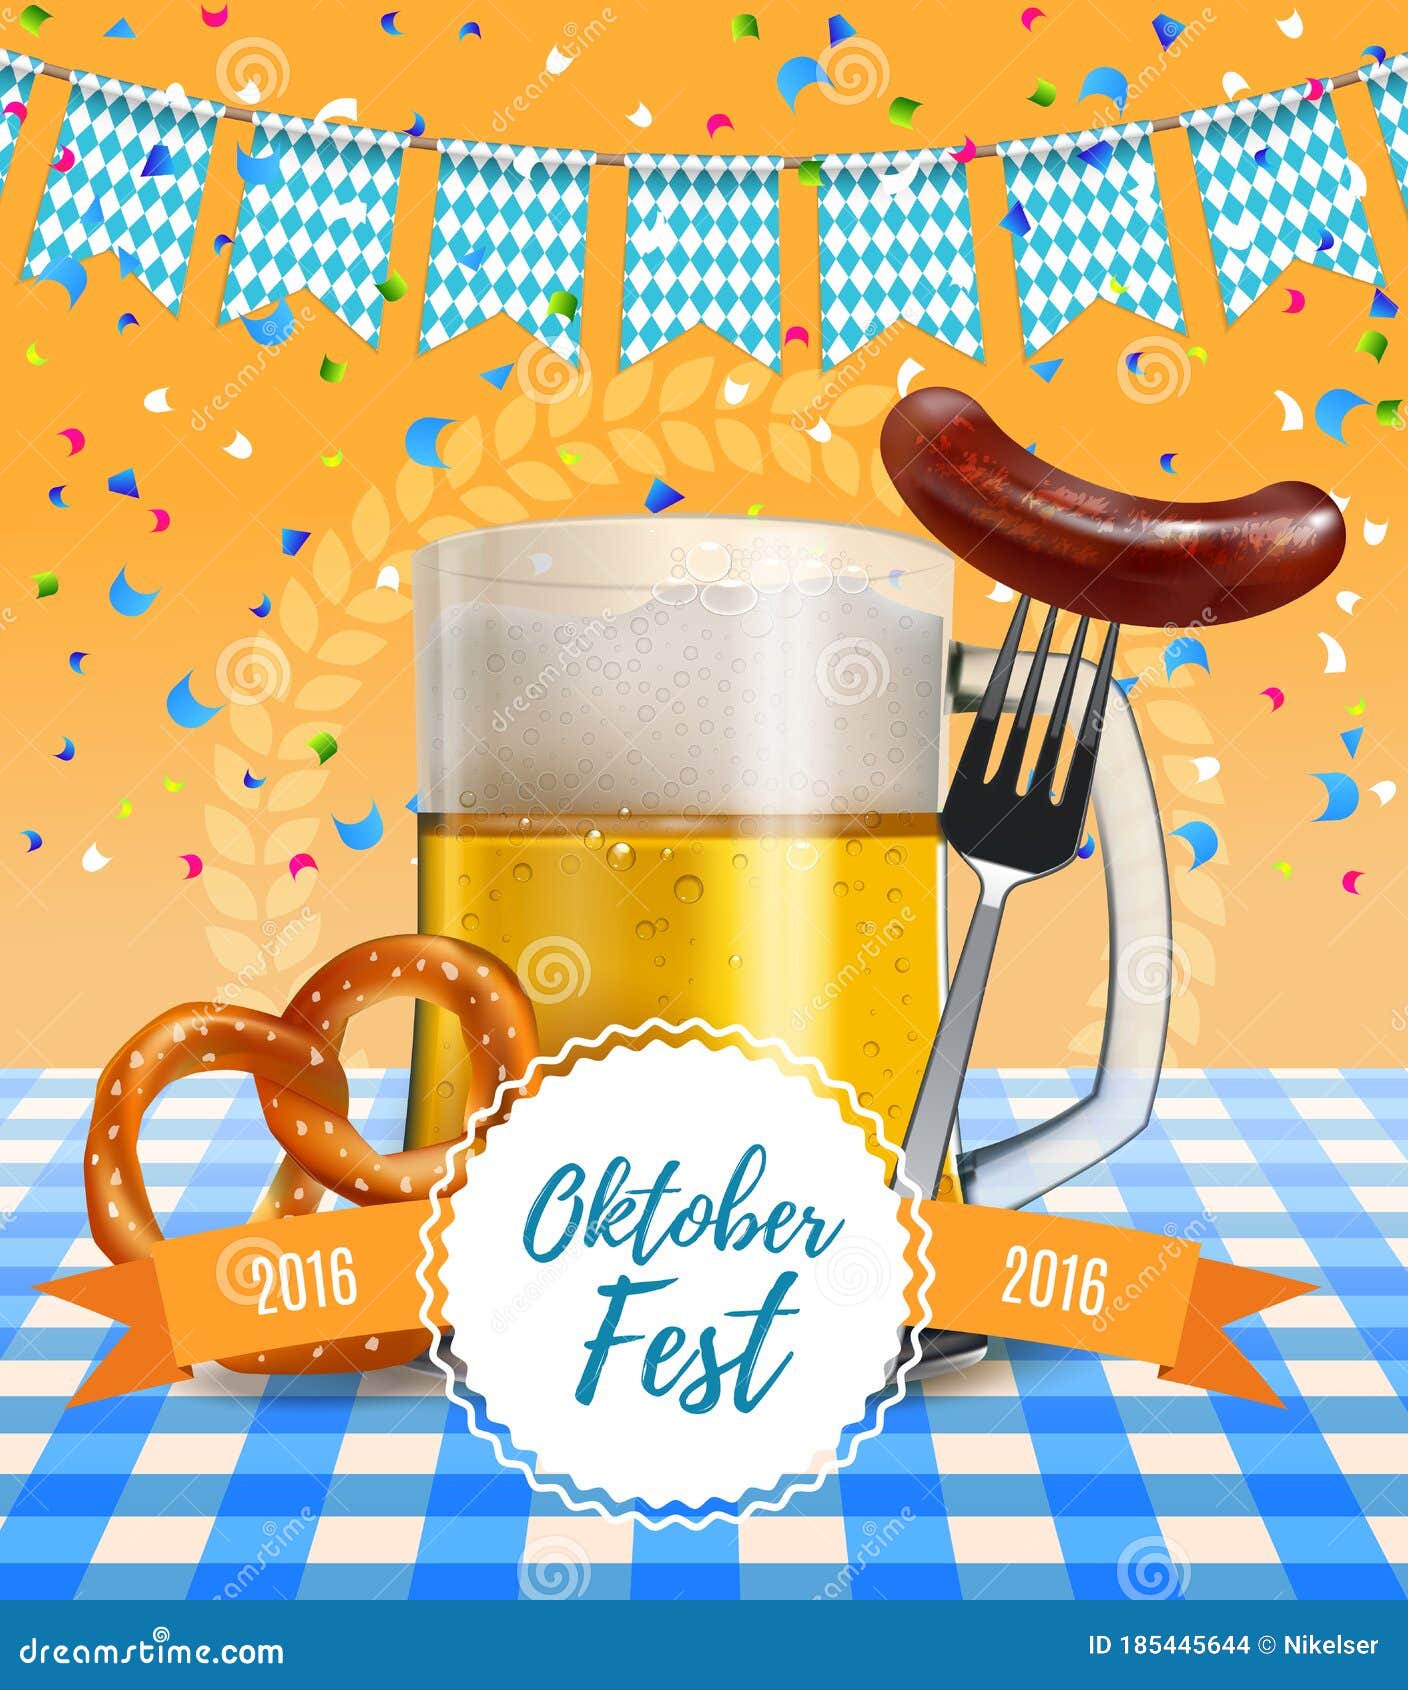 Oktoberfest Poster. German Beer Festival Poster with Realistic Beer Mug,  Pretzel and Bavarian Sausage on a Fork Stock Vector - Illustration of  invitation, bavarian: 185445644